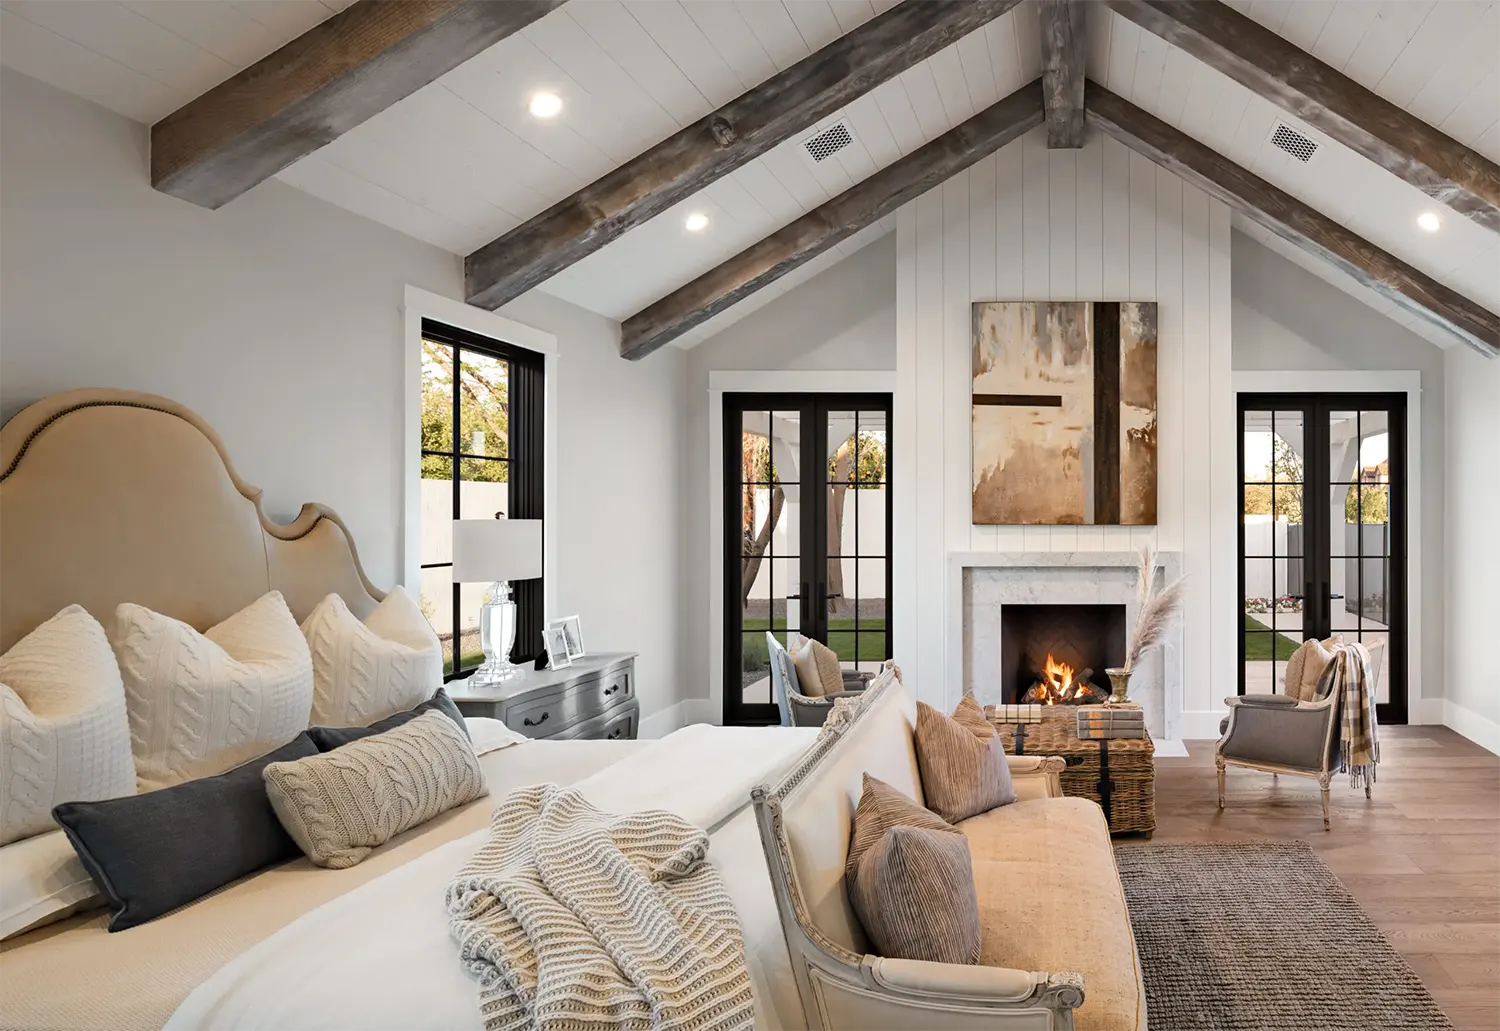 12 Key Elements to Design Modern Farmhouse Bedroom